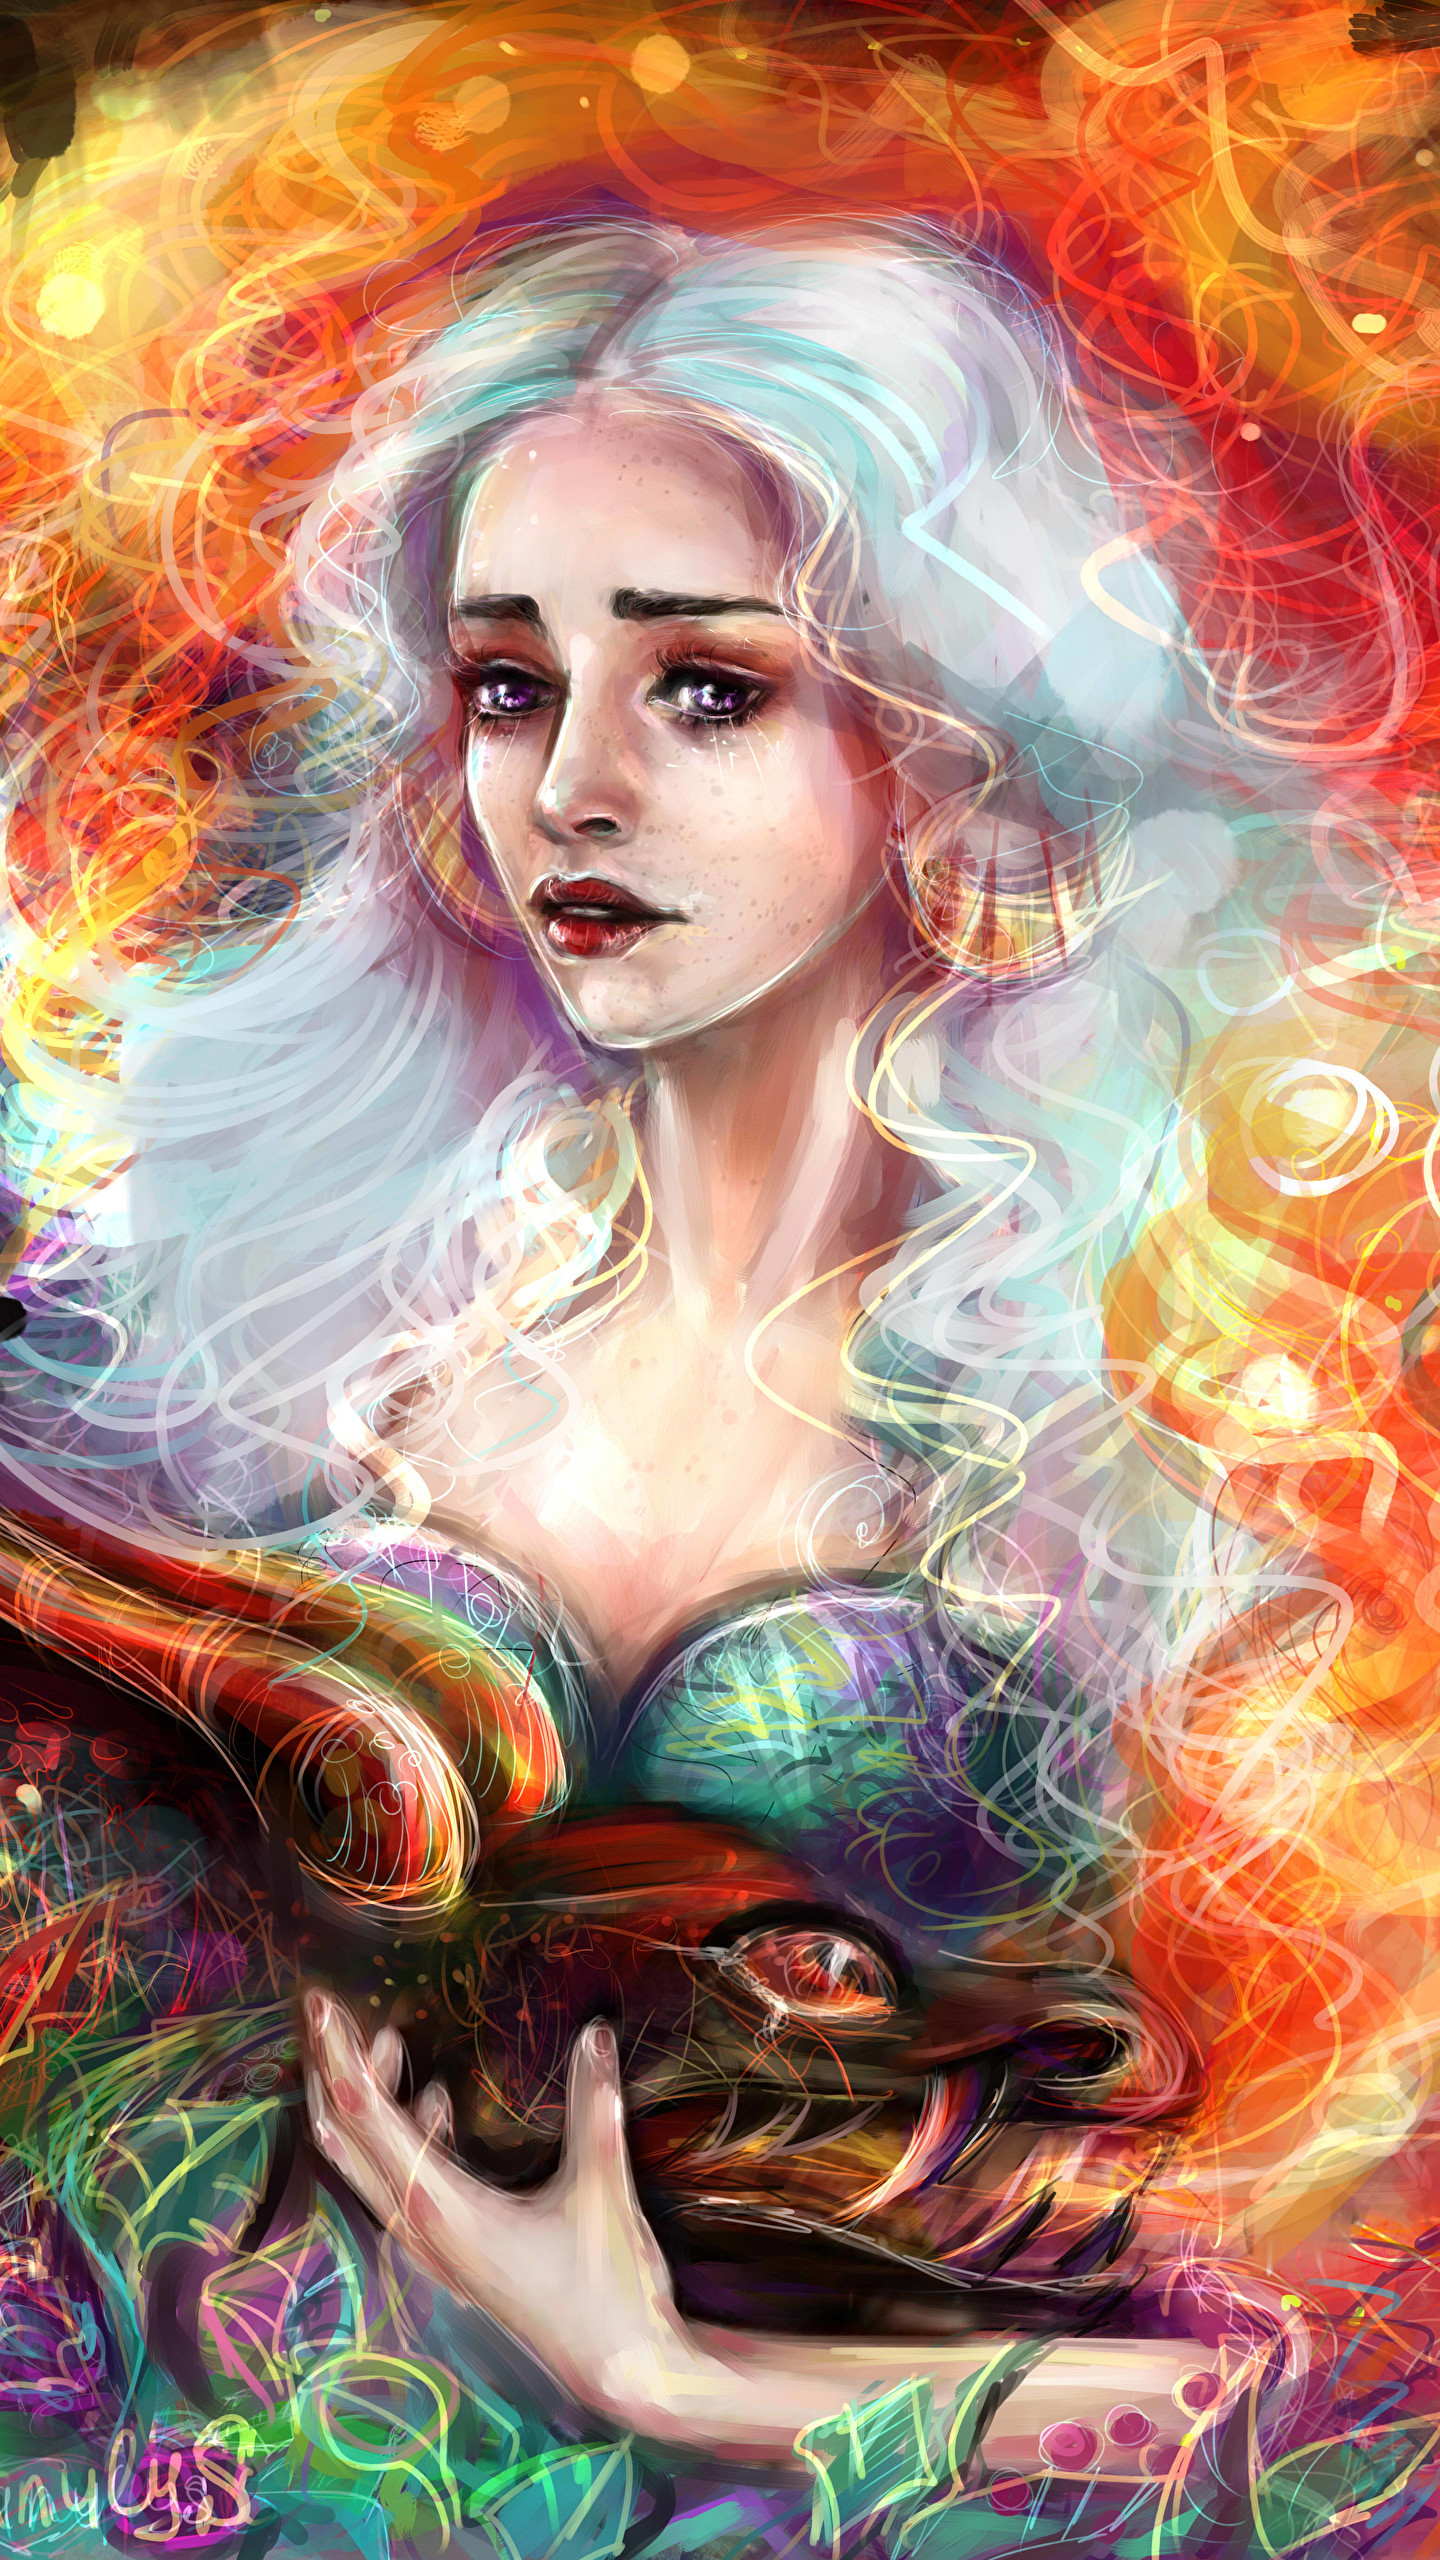 emilia clarke game of thrones wallpaper,cg artwork,illustration,art,fictional character,mythology